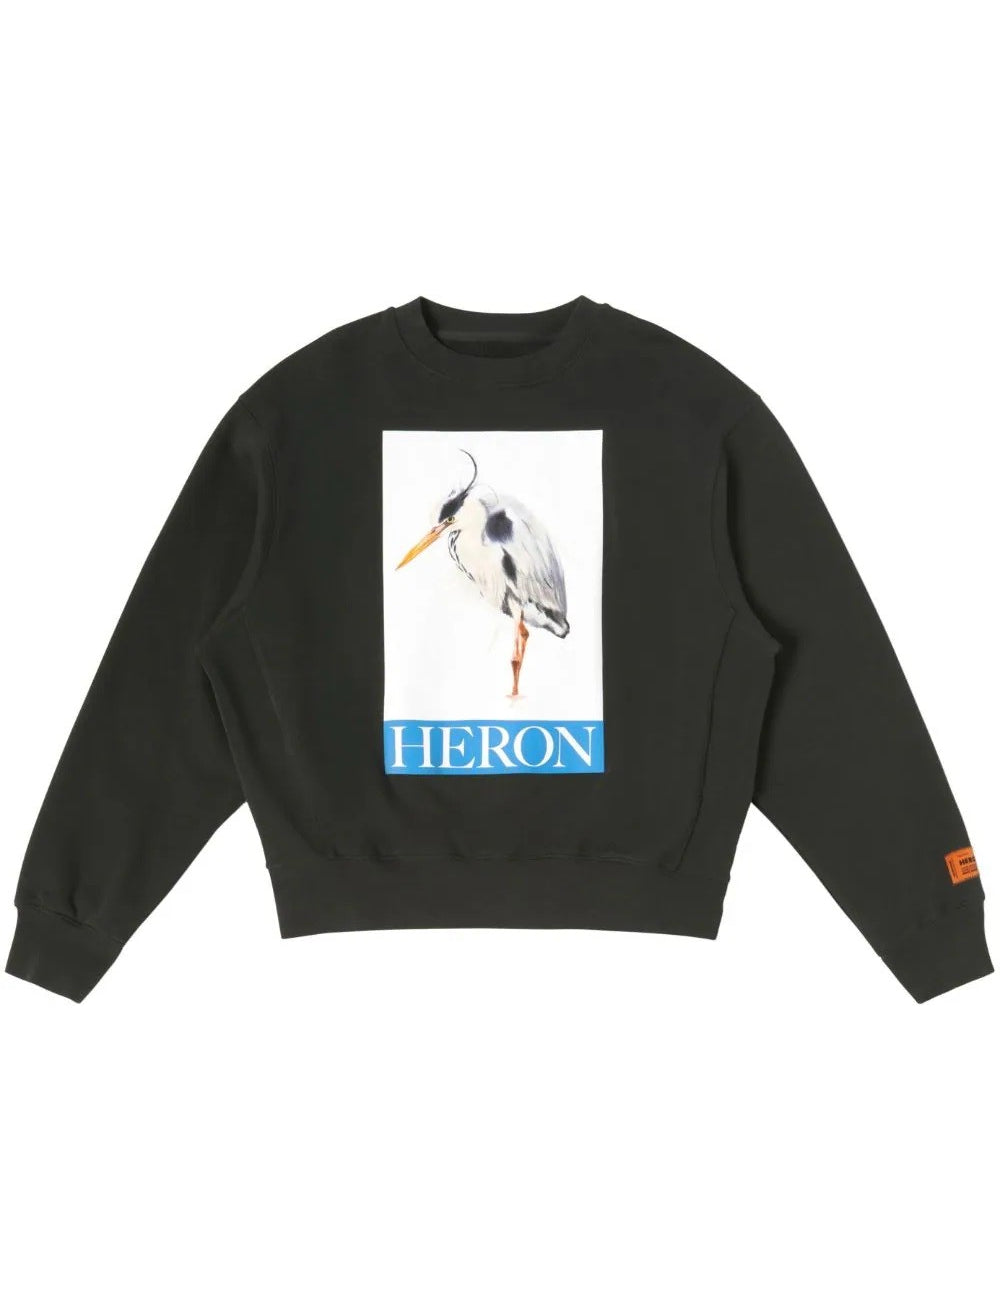 heron-bird-crewneck-sweater_edaa65fa-2f7a-48f7-9843-0b73a3ac7003.jpg